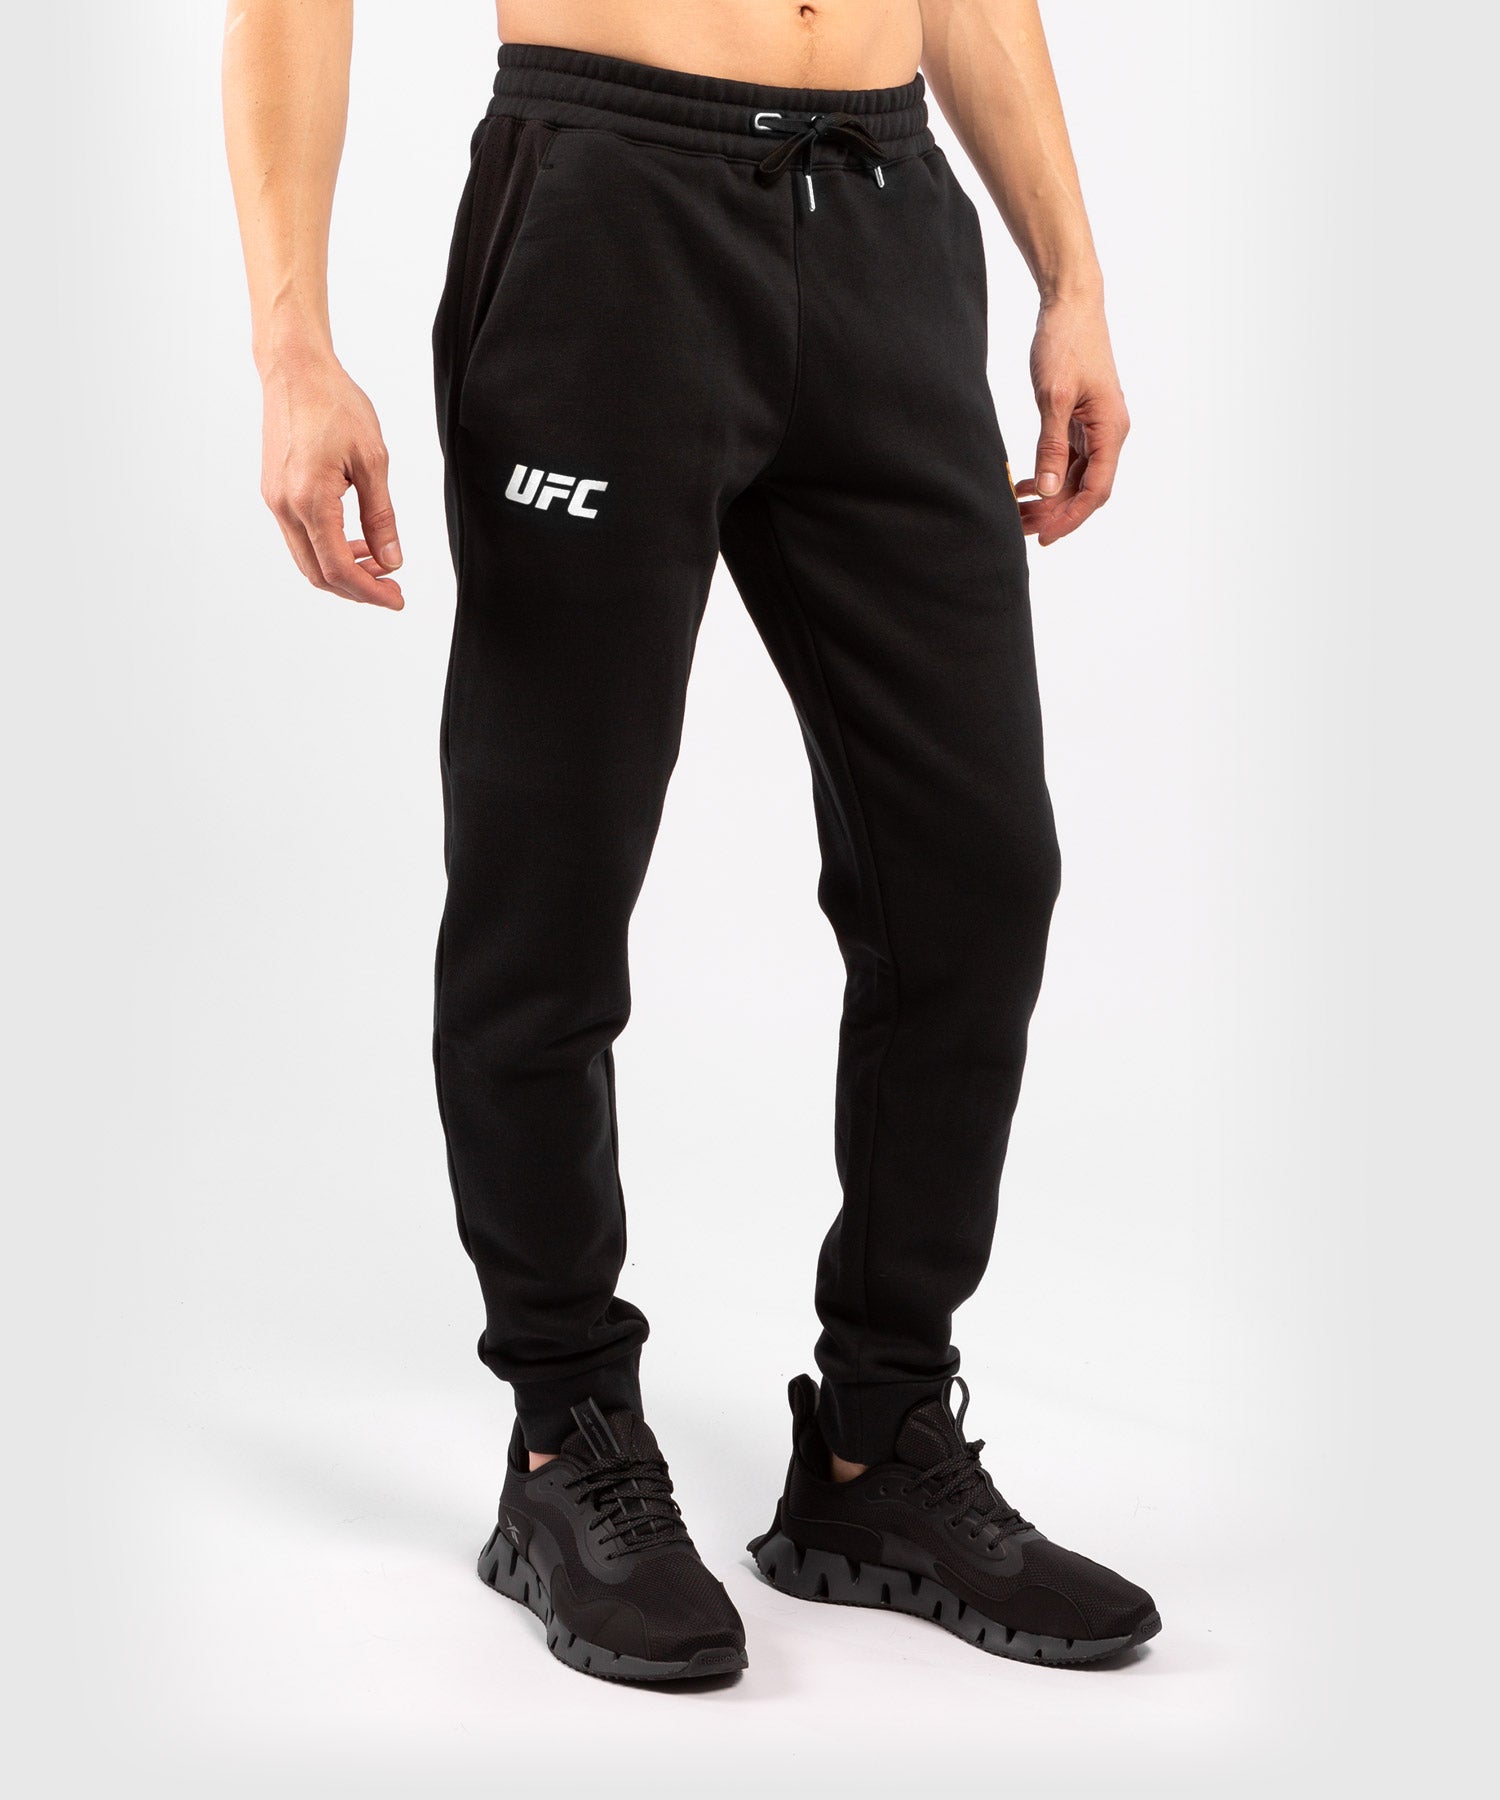 UFC Venum Replica Men's Pants - Black - Venum